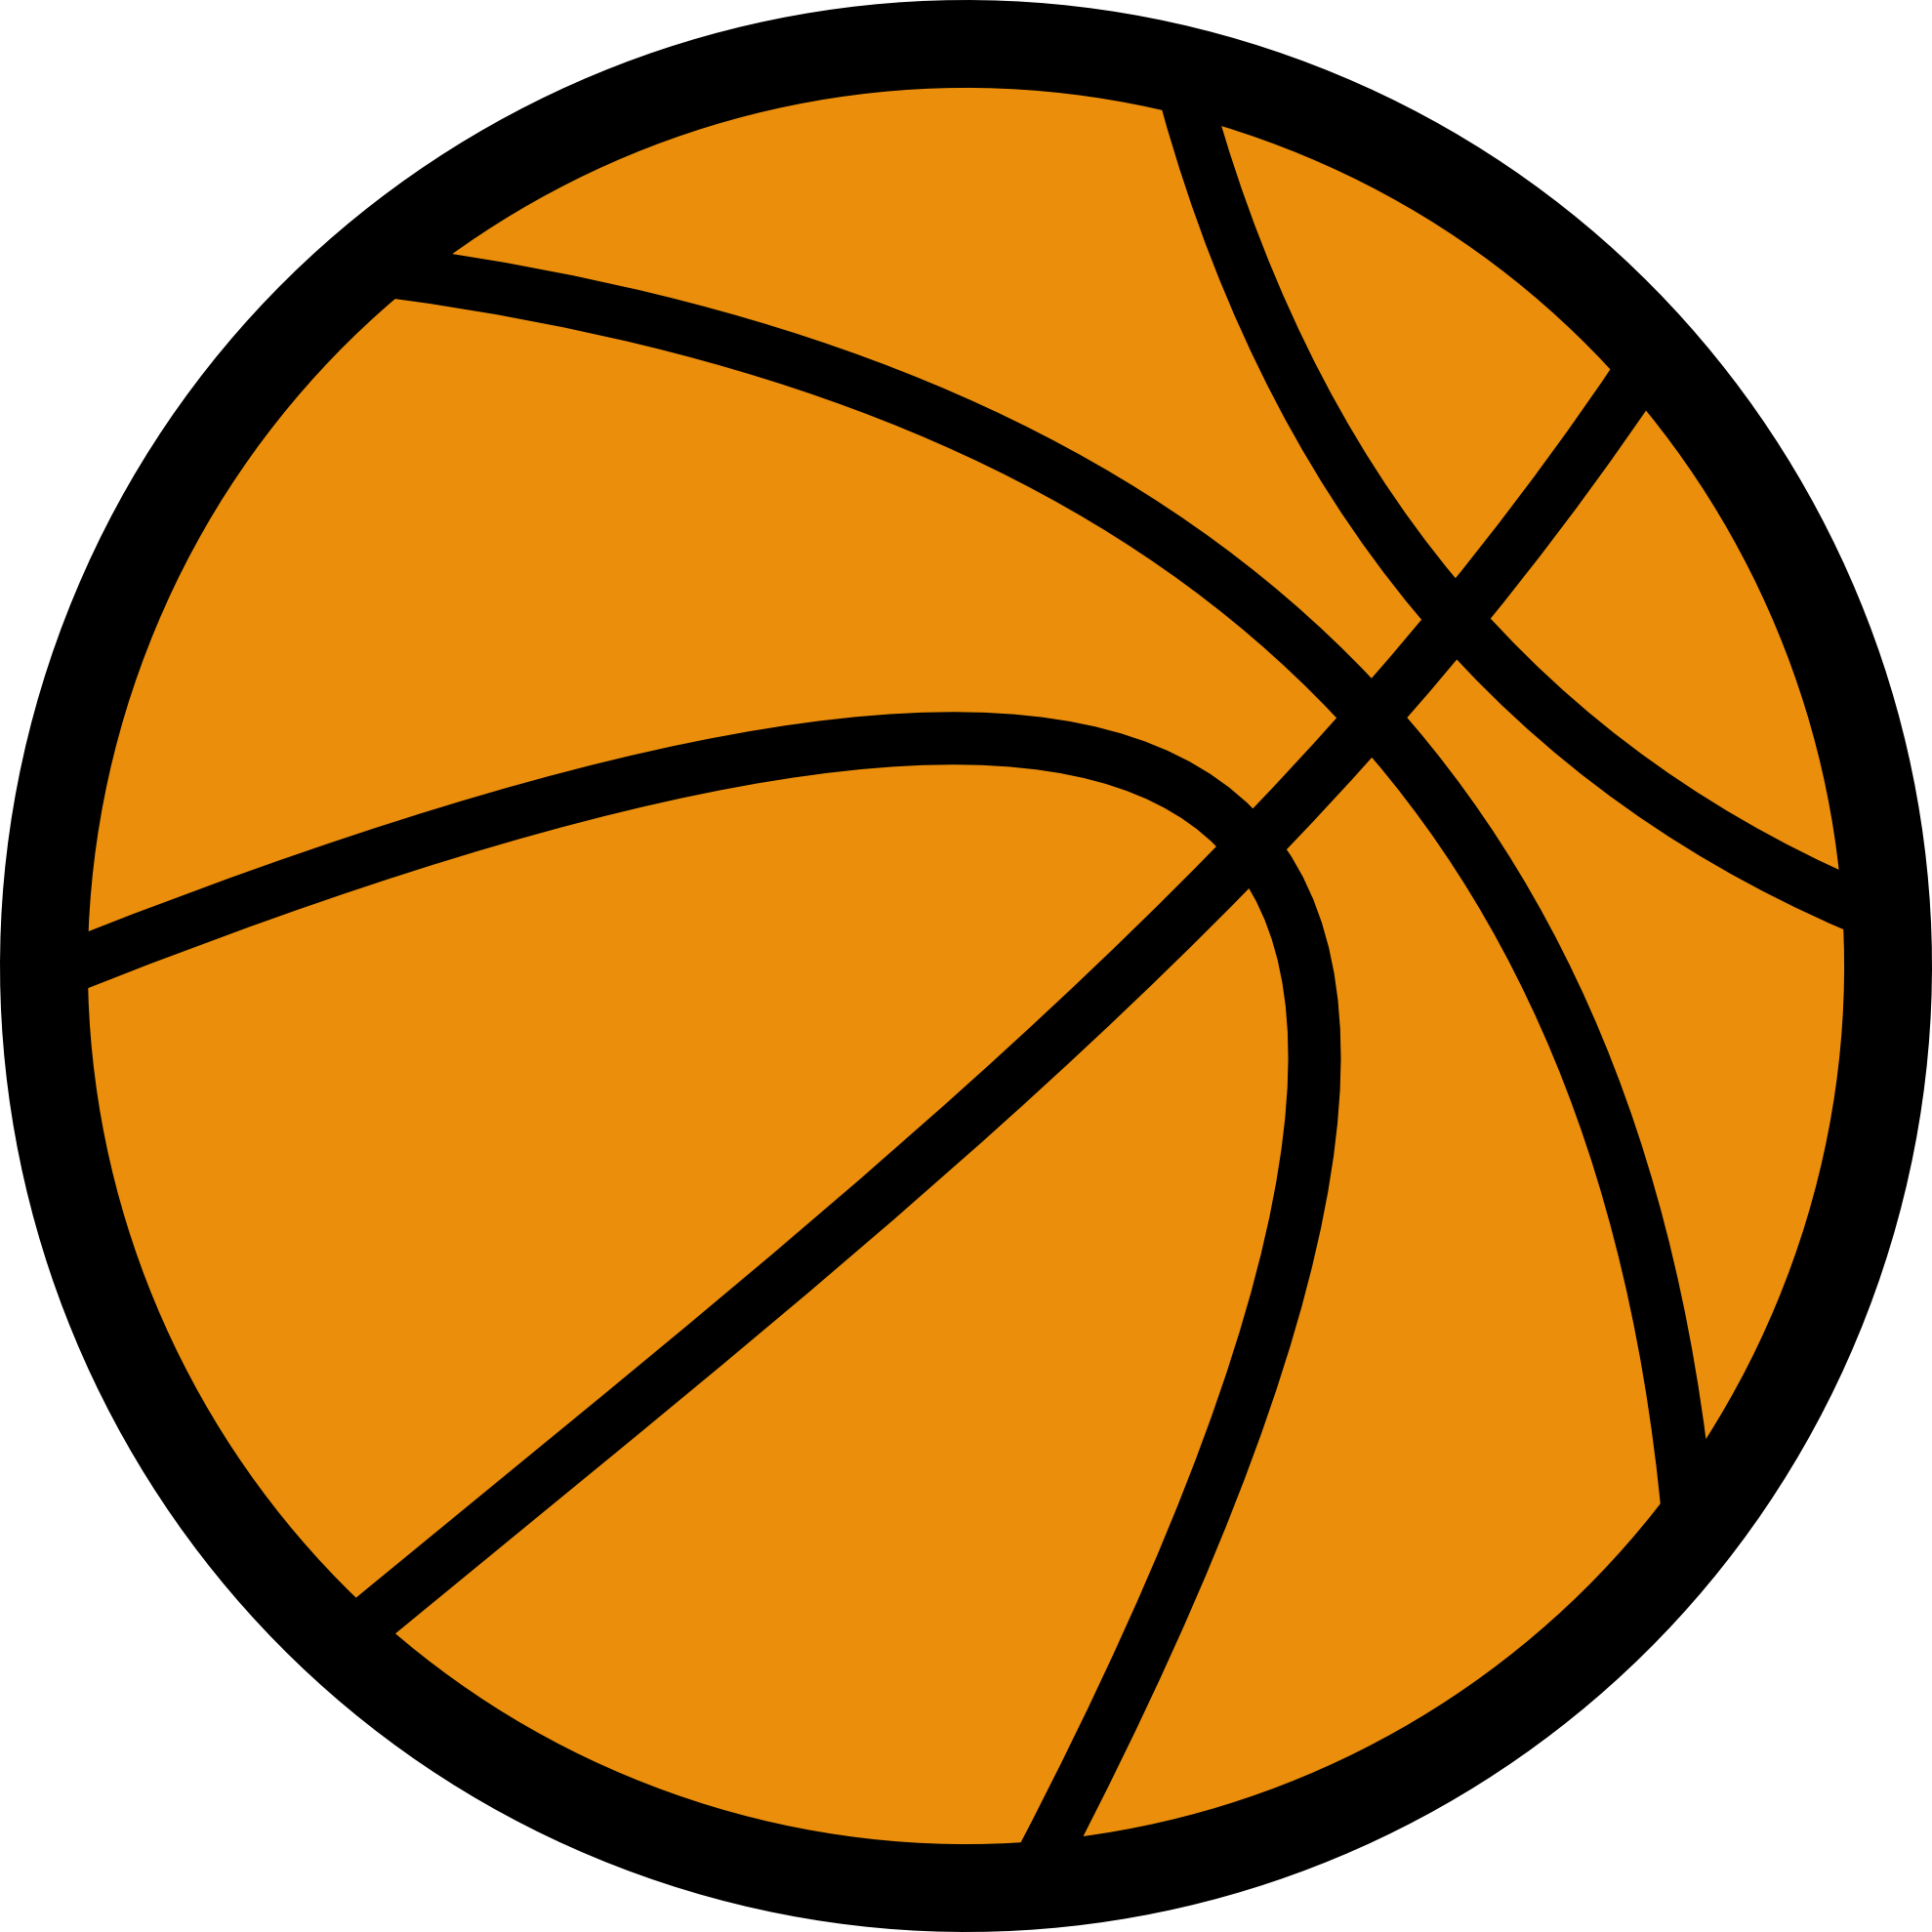 Transparent Basketball Logo - Basketball HD PNG Transparent Basketball HD.PNG Images. | PlusPNG